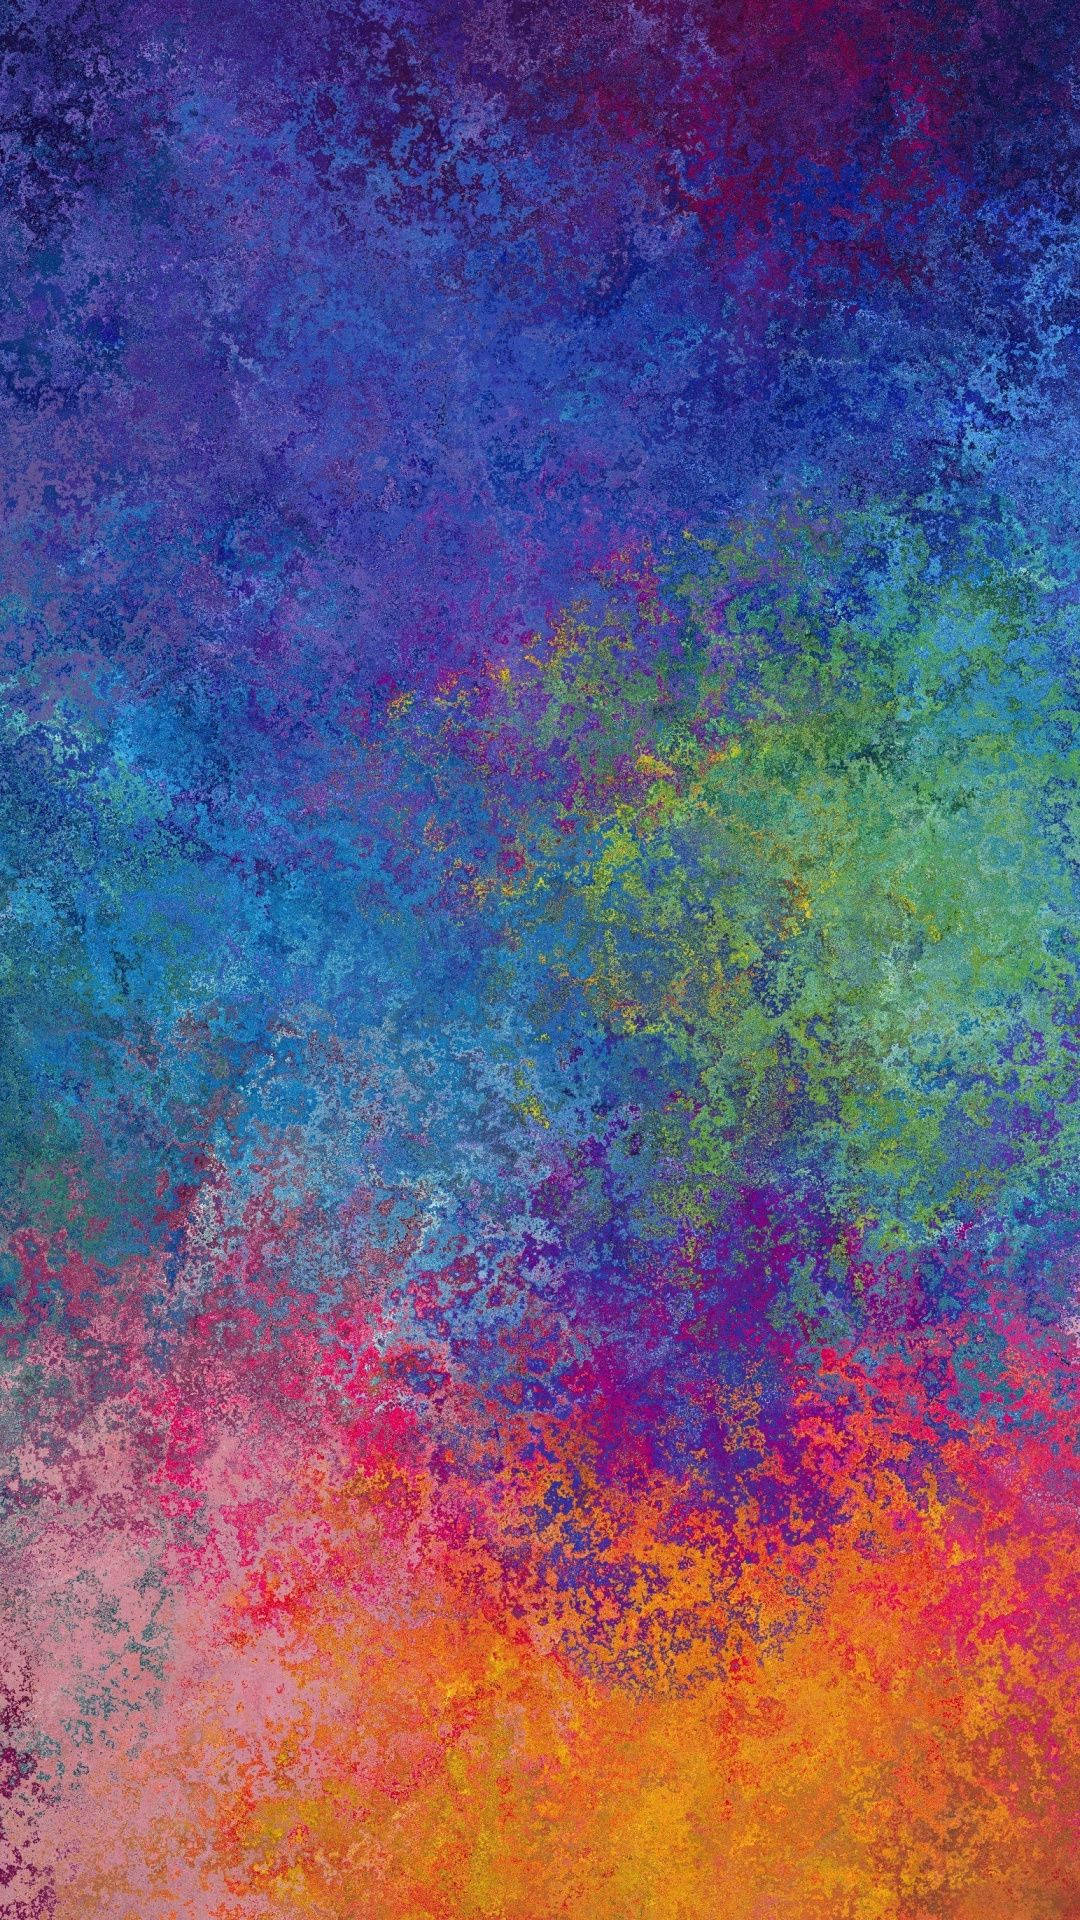 Redmi 9 Spilled Paint Background